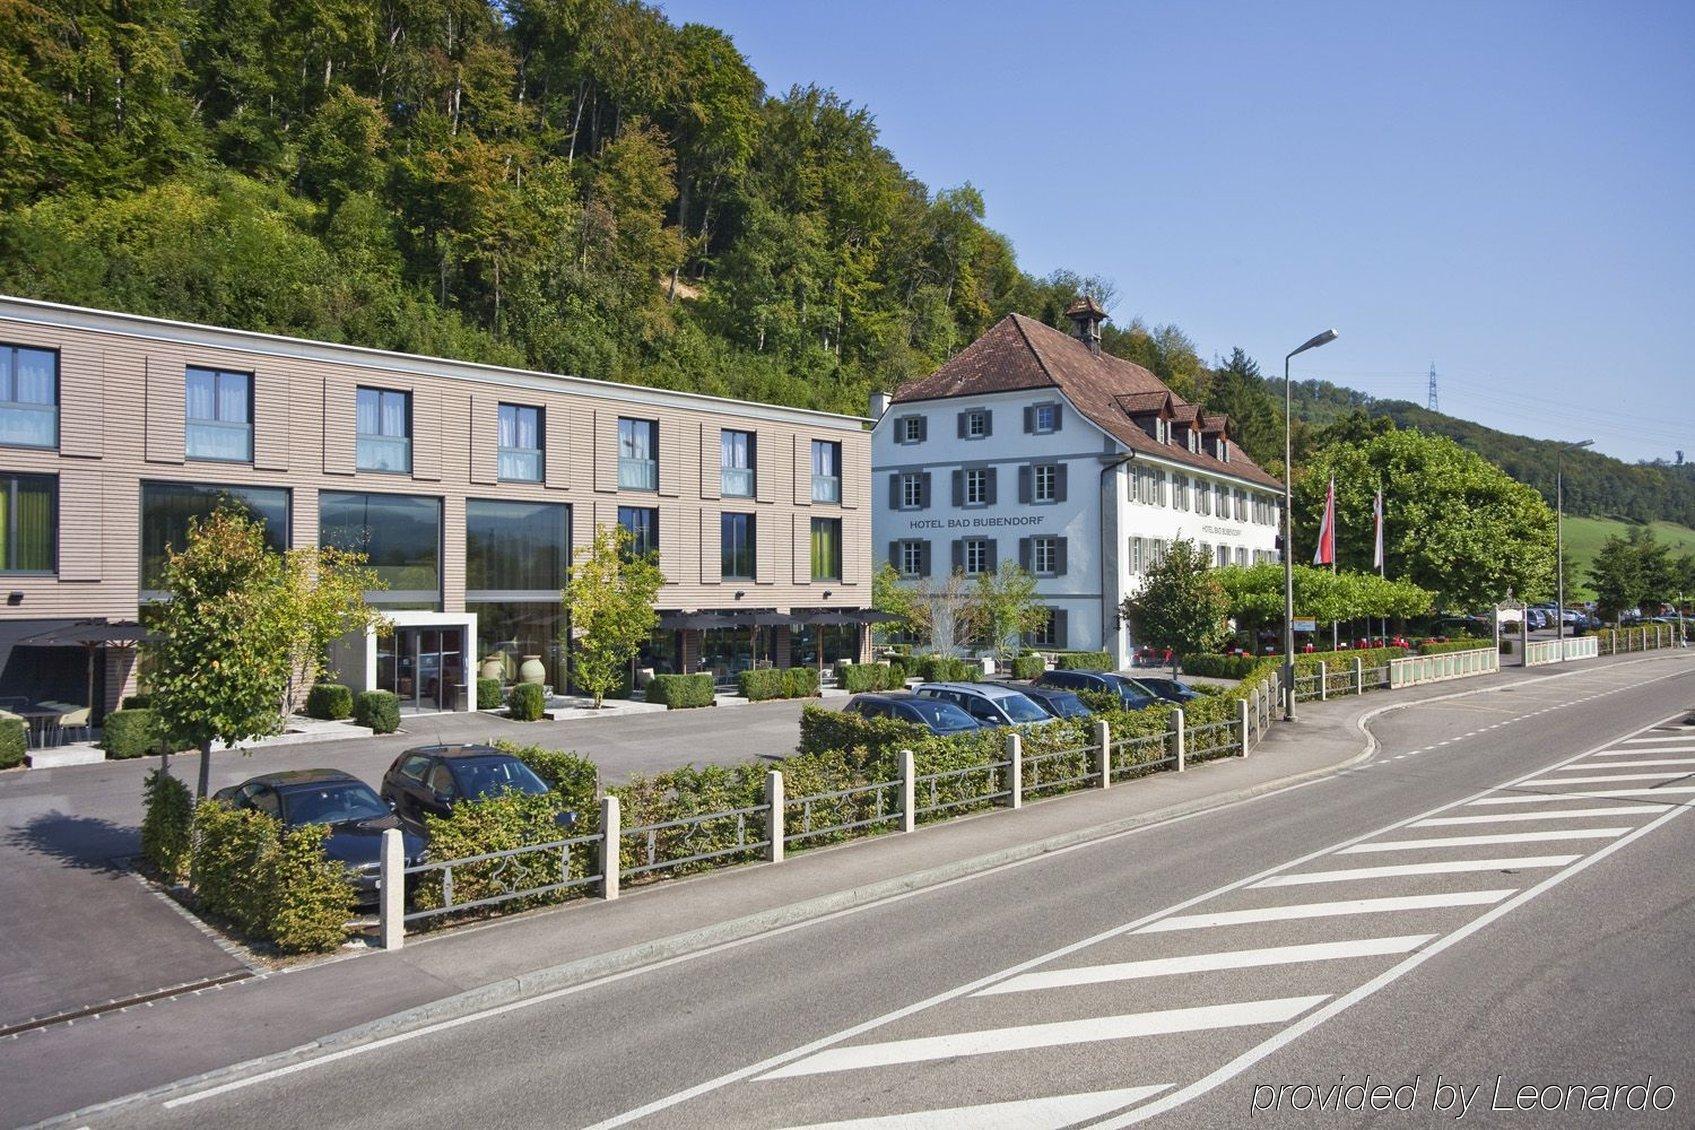 Bad Bubendorf Design & Lifestyle Hotel Exterior photo